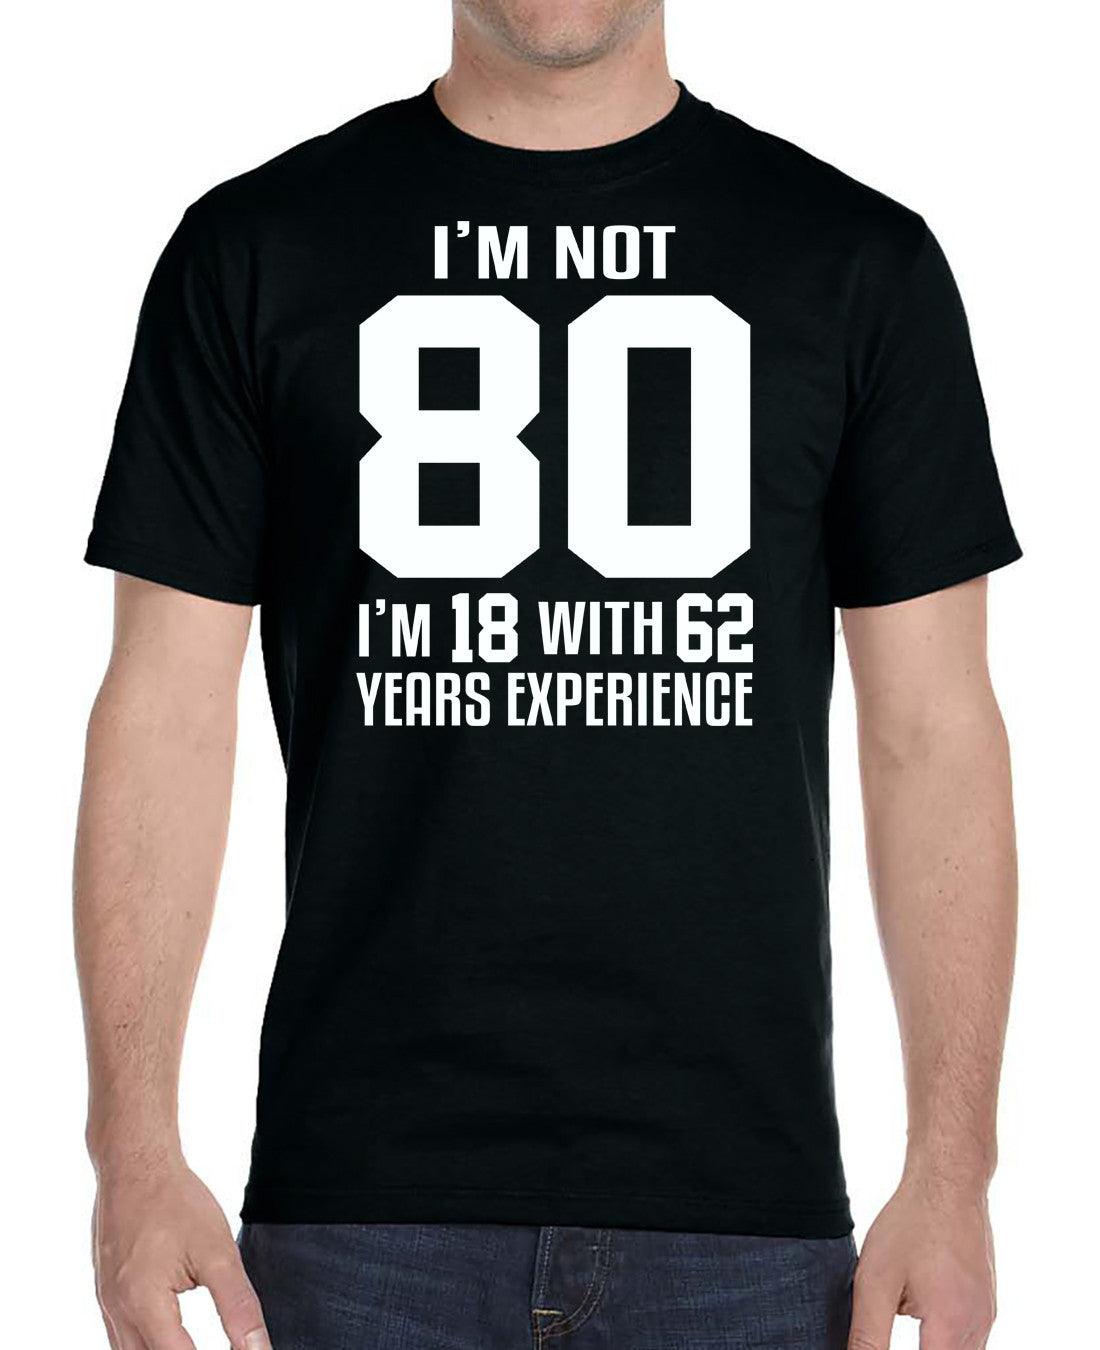 I'm Not 80 I'm 18 With 62 Years Experience - Unisex T-Shirt - Birthday Shirt - familyteeprints